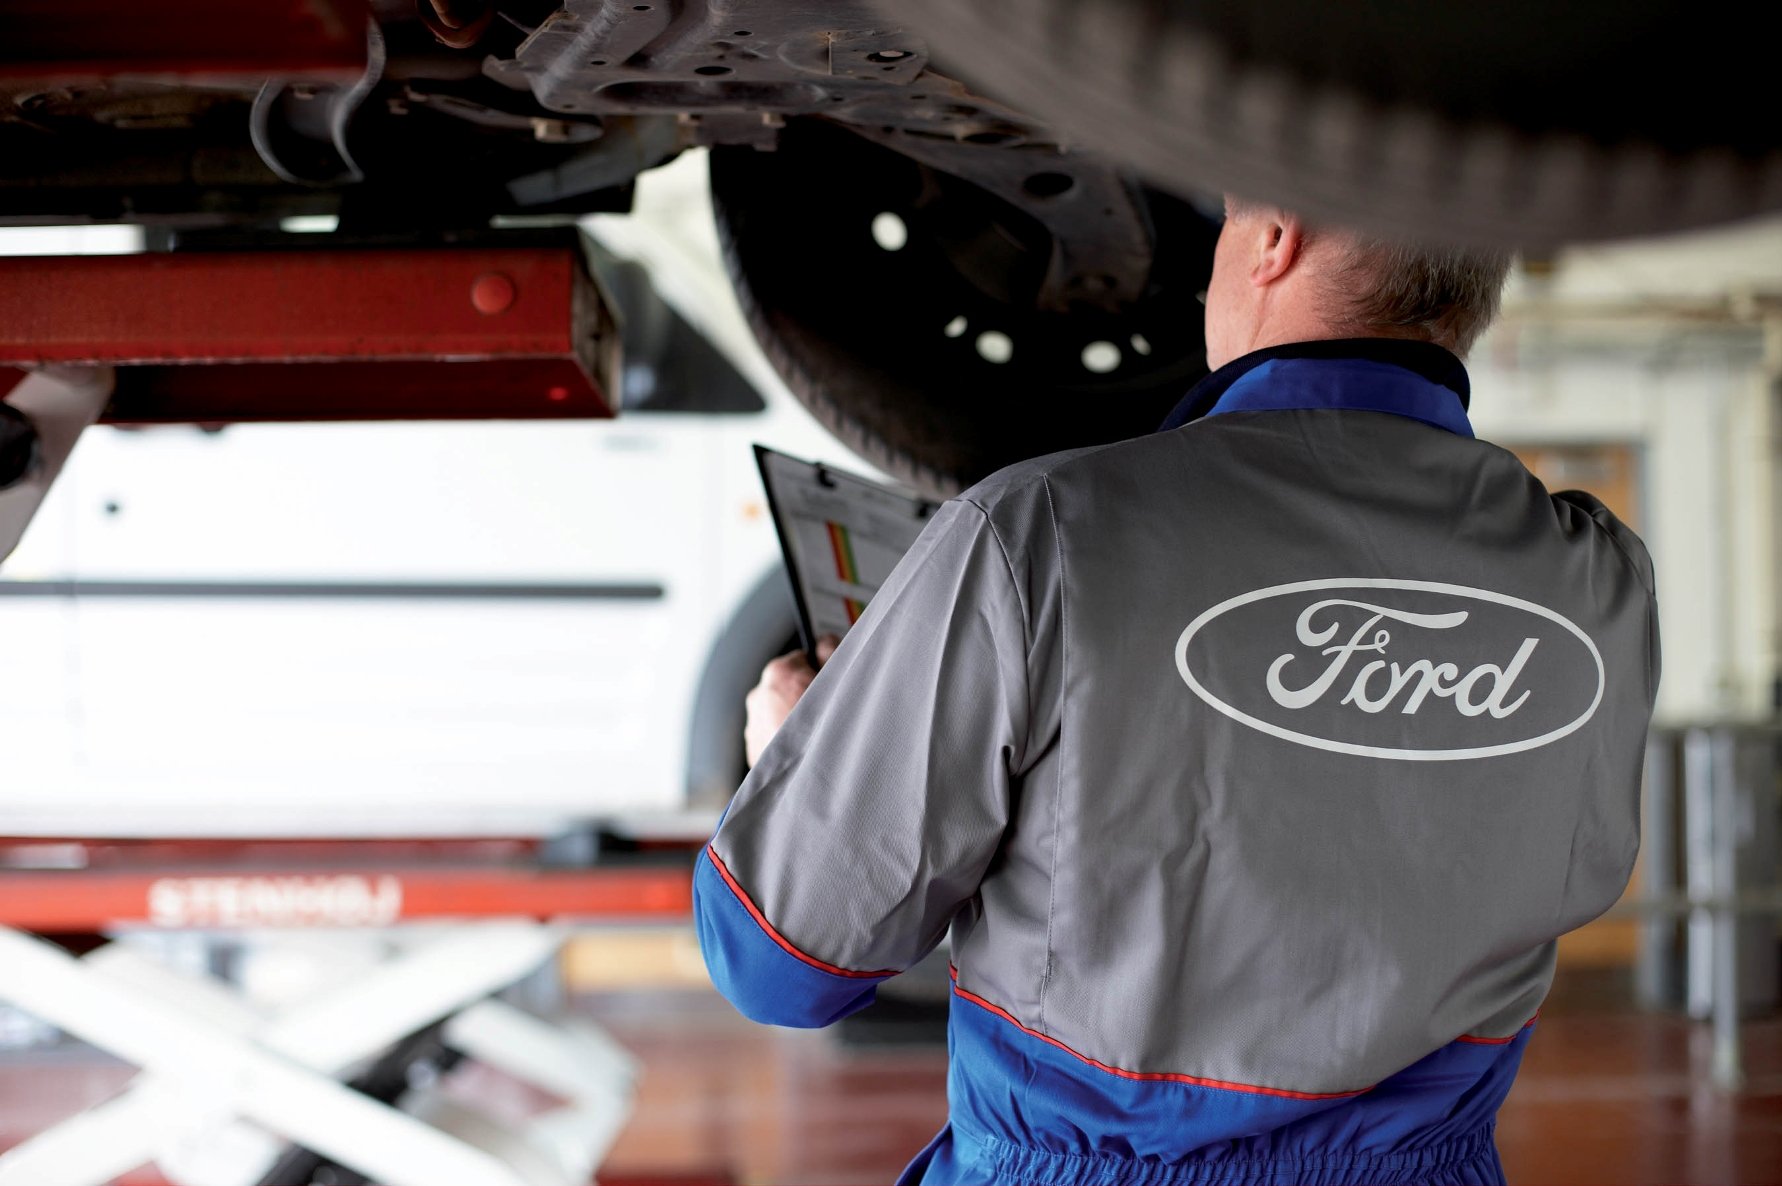 ford-service-car-van-mot-service-and-repair-golds-garages